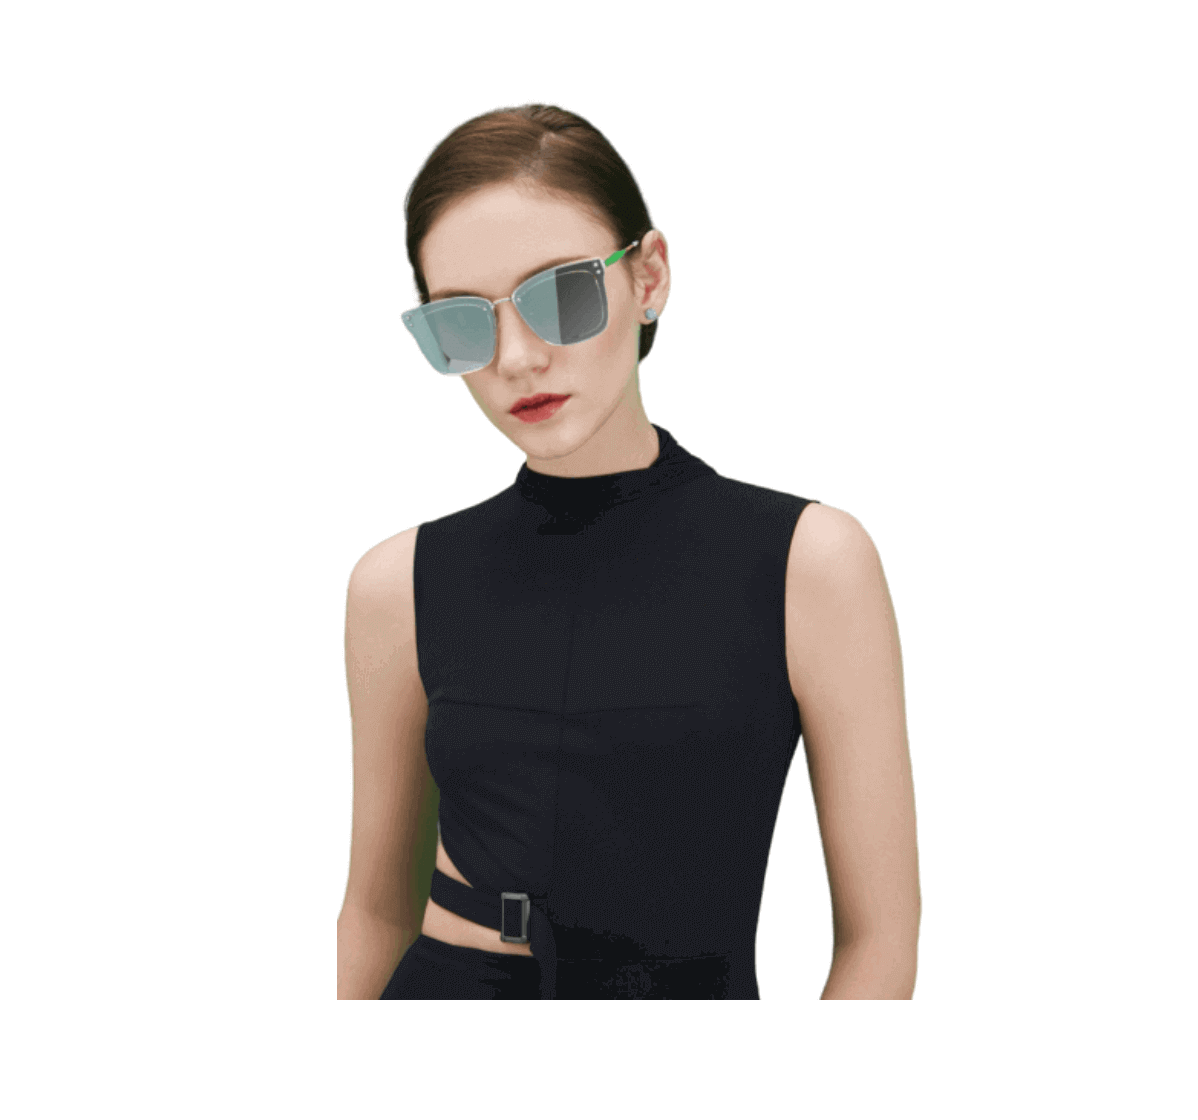 Sunglasses Manufacturer in China - Factorie Sunglasses_womens sunglasses